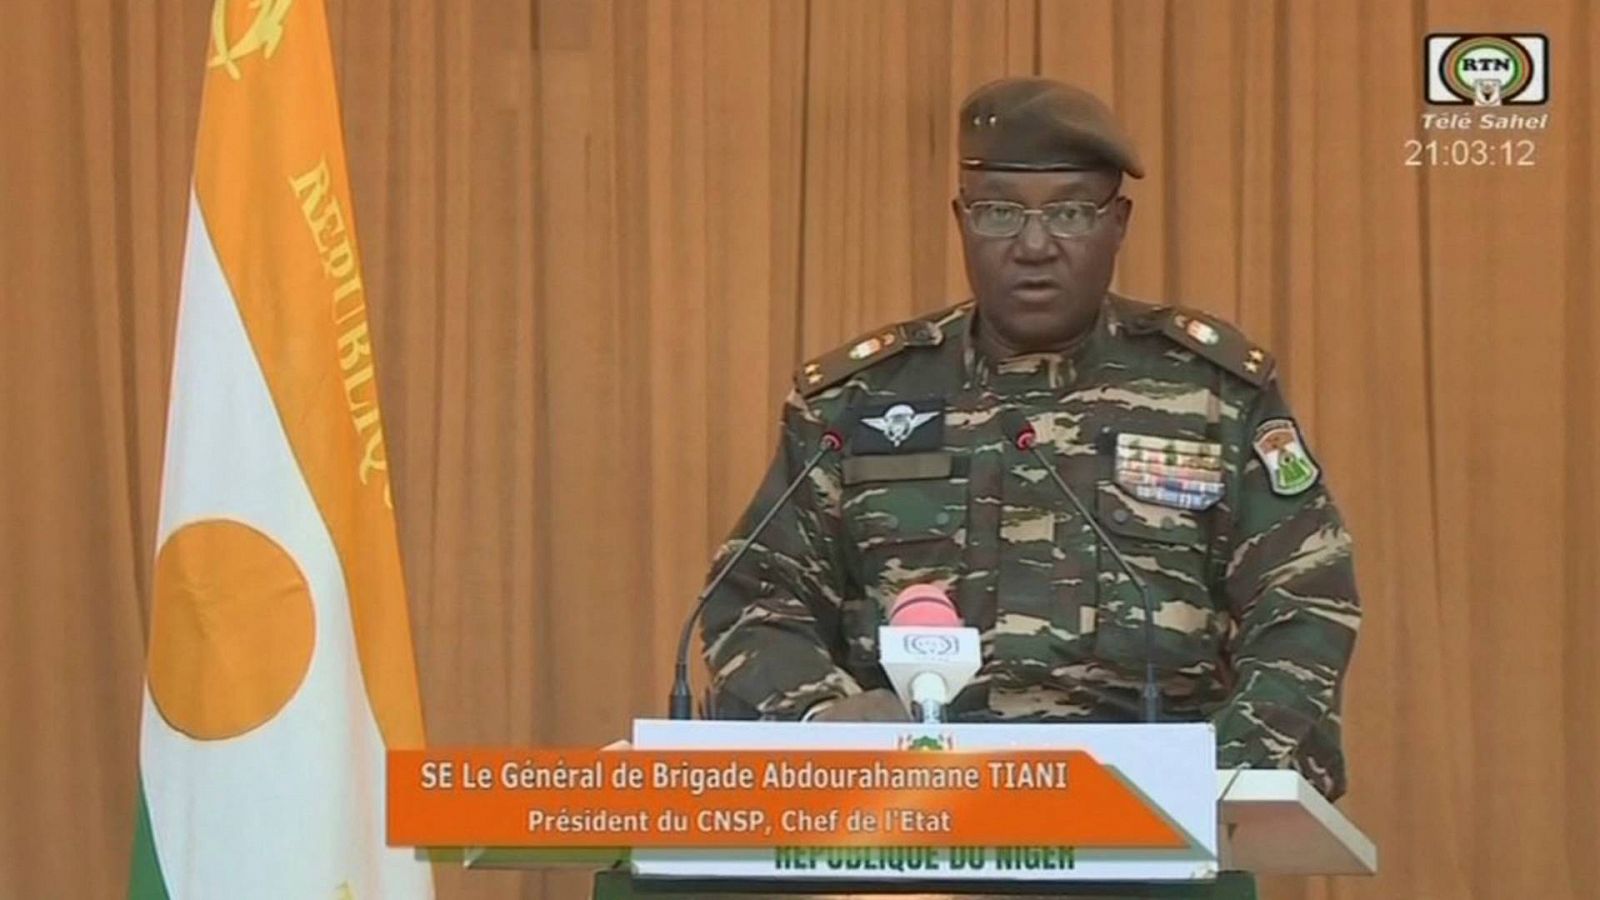 Una imagen de Abdourahamane Tiani, líder de la junta militar de Níger.